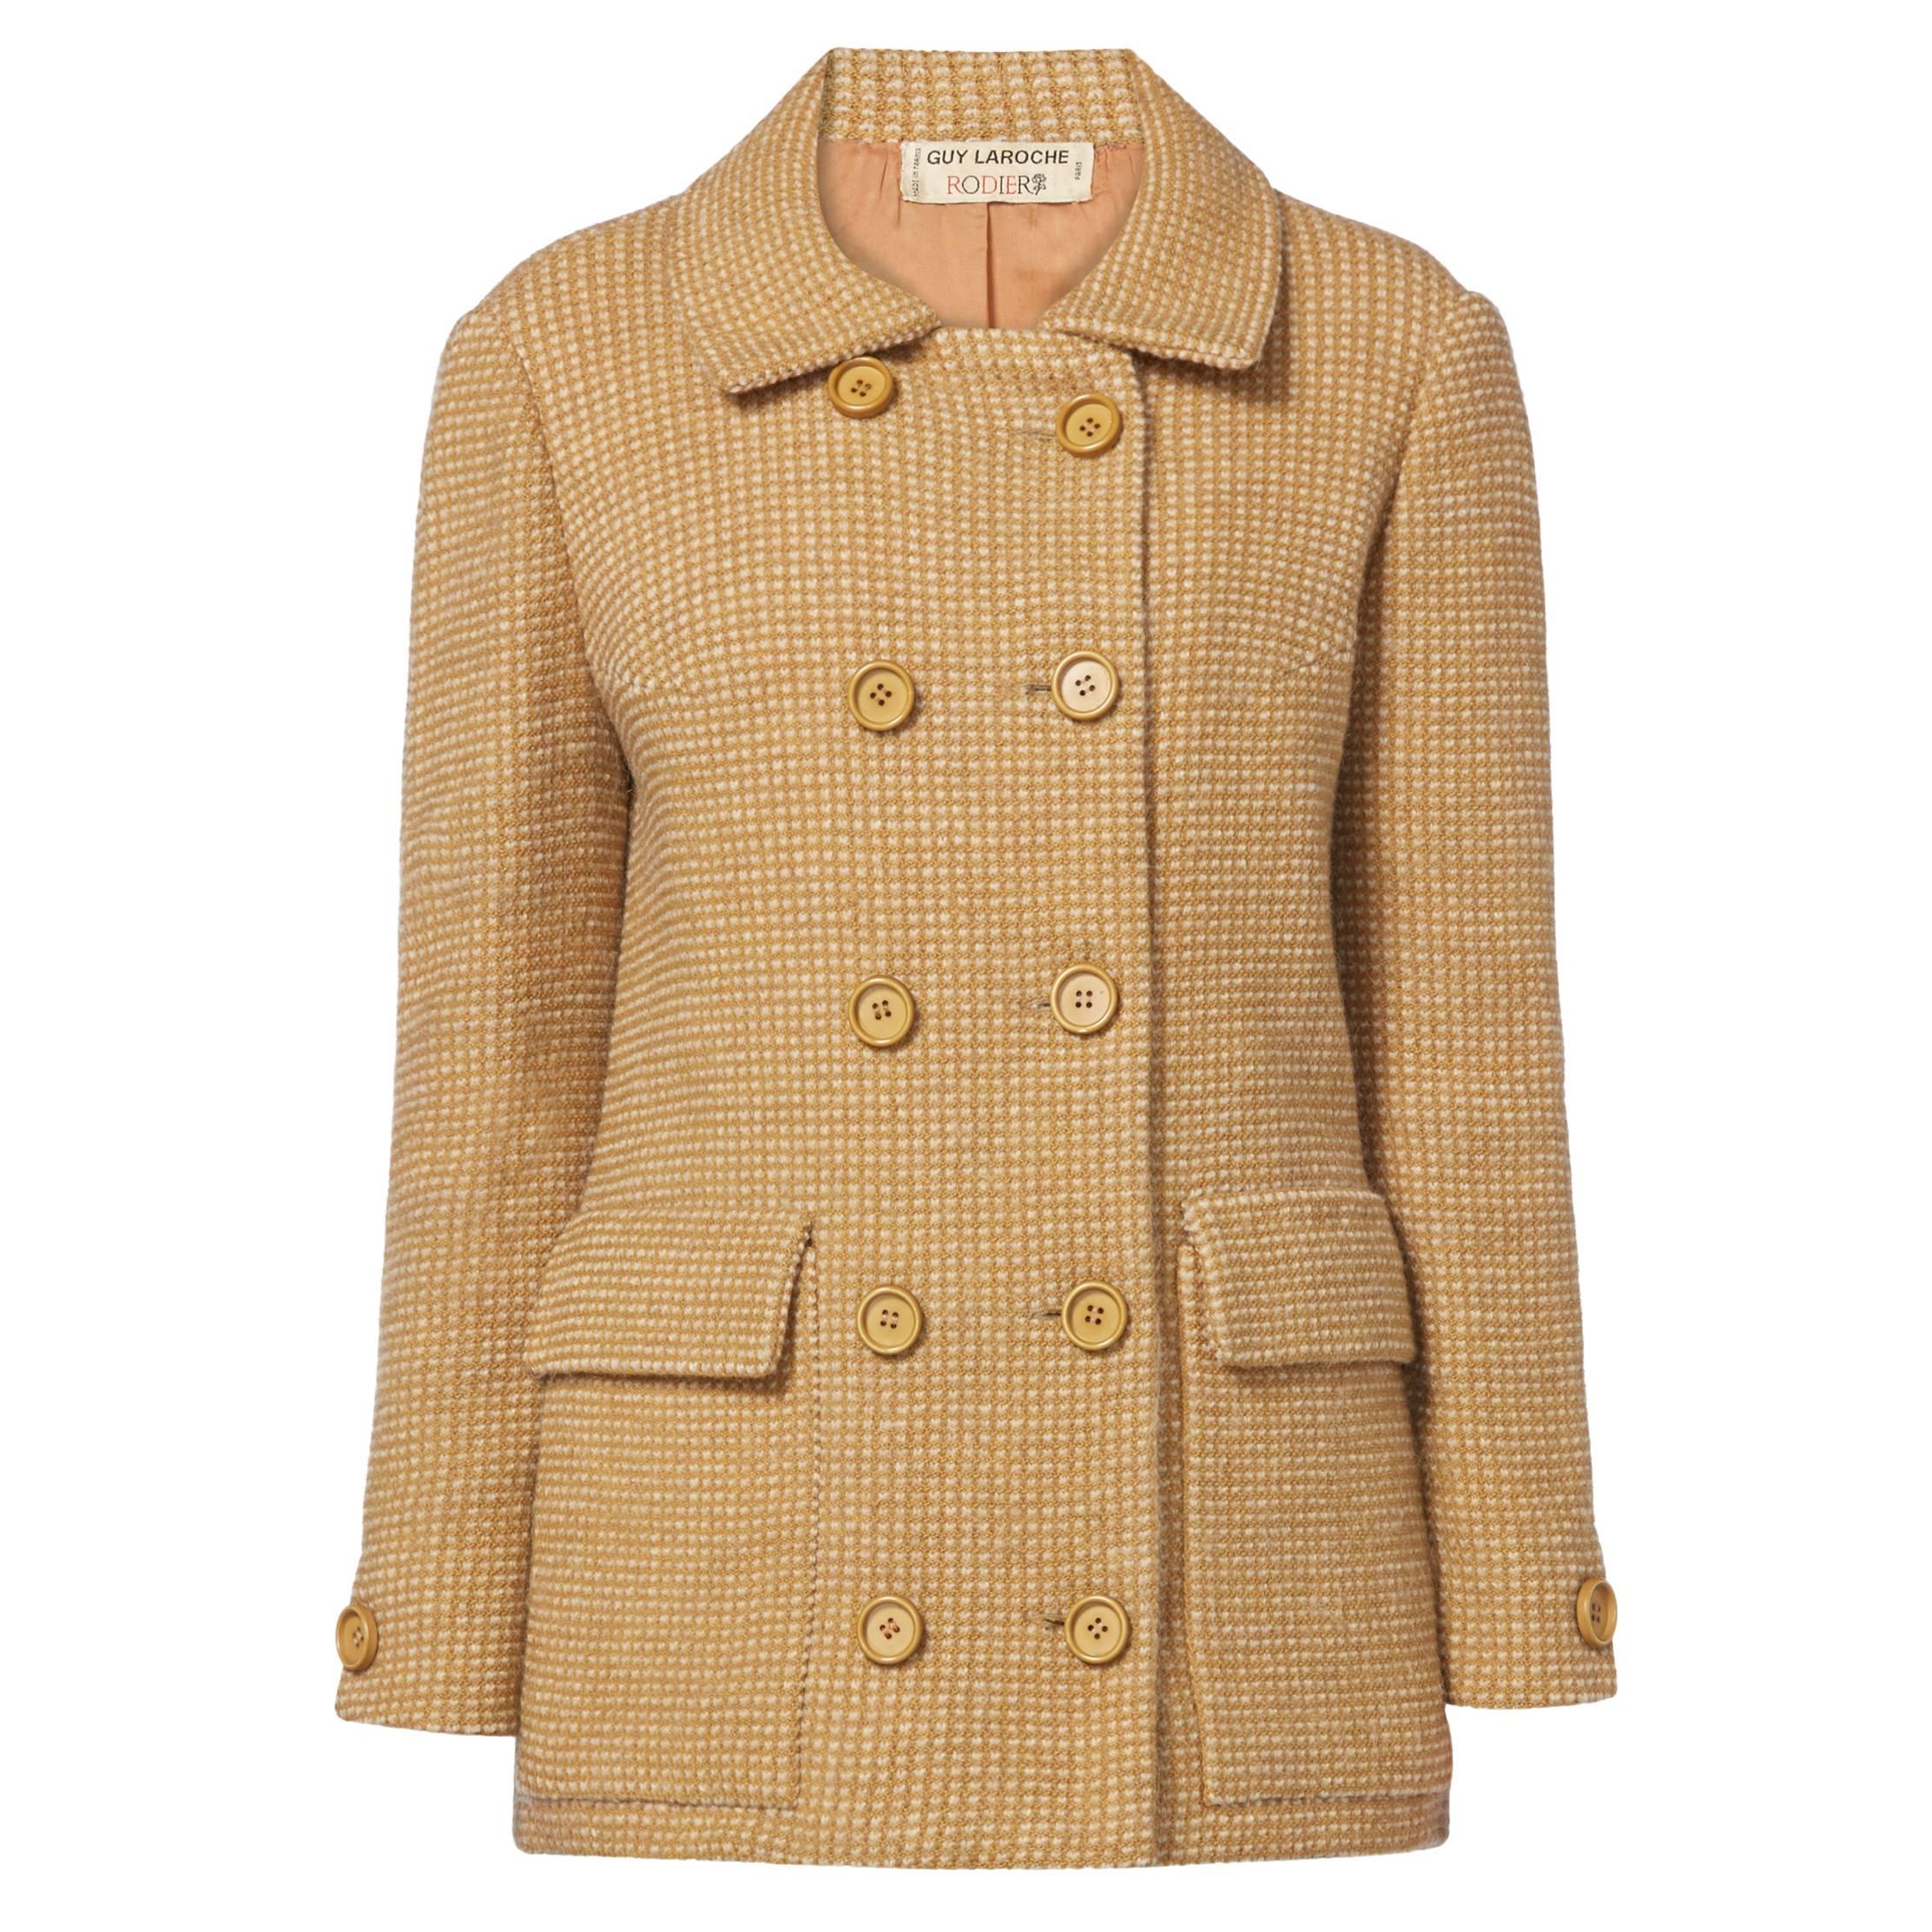 Guy Laroche brown tweed jacket, circa 1963 For Sale